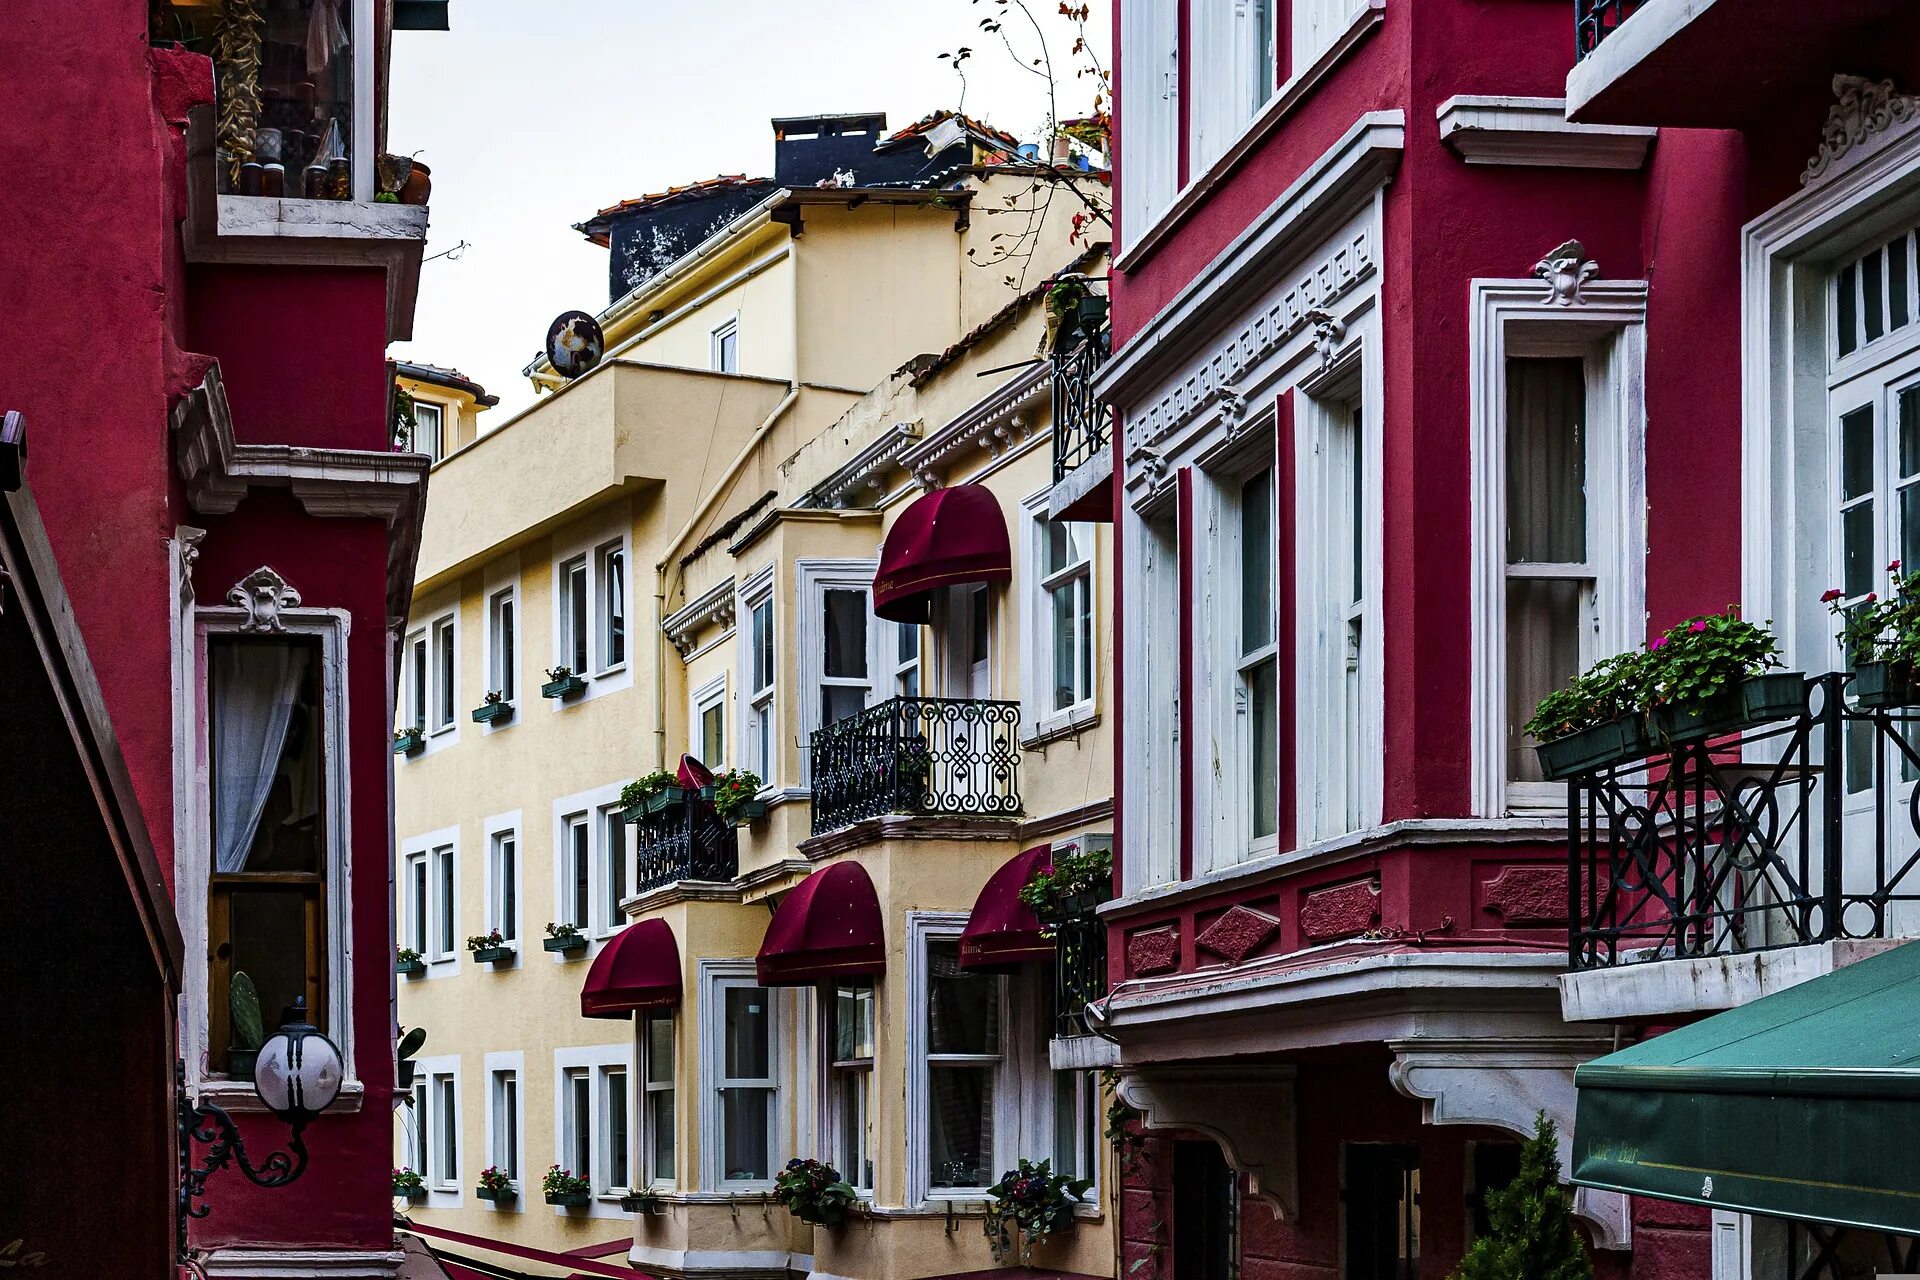 Француз улица. Бейоглу район в Стамбуле. Улицы Бейоглу в Стамбуле. Французская улица в Стамбуле. Стамбул Турция улочки кафе.